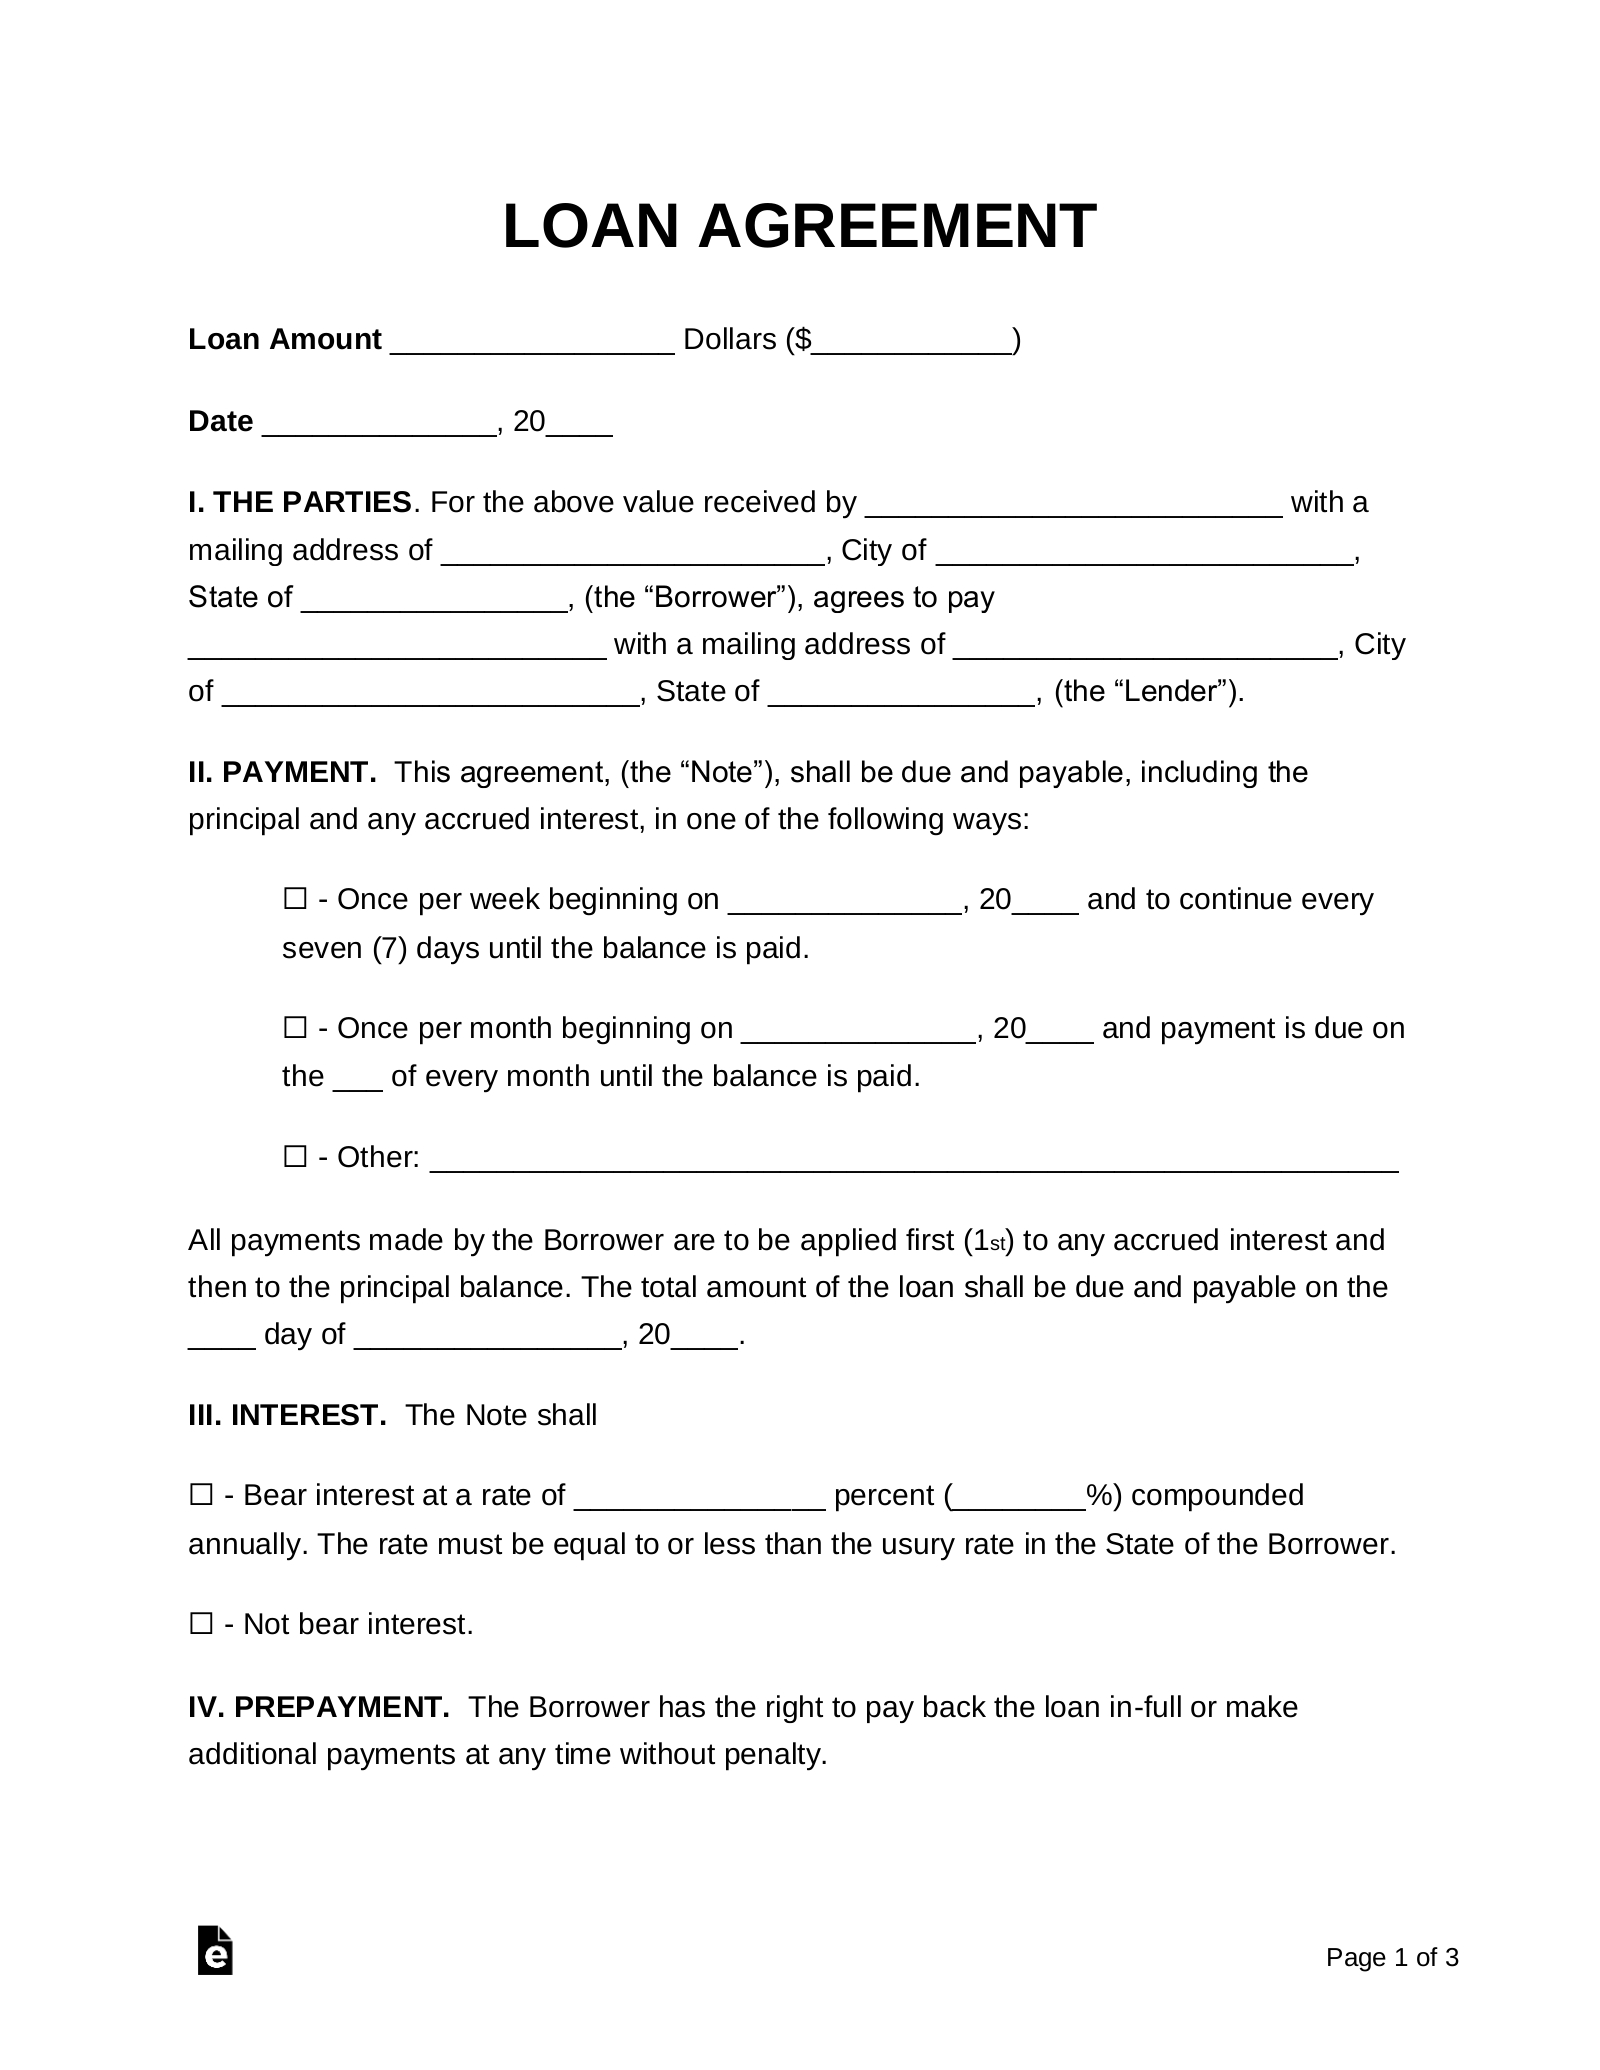 Personal Loan Agreement Sample Pdf - Falep.midnightpig.co Regarding Blank Loan Agreement Template